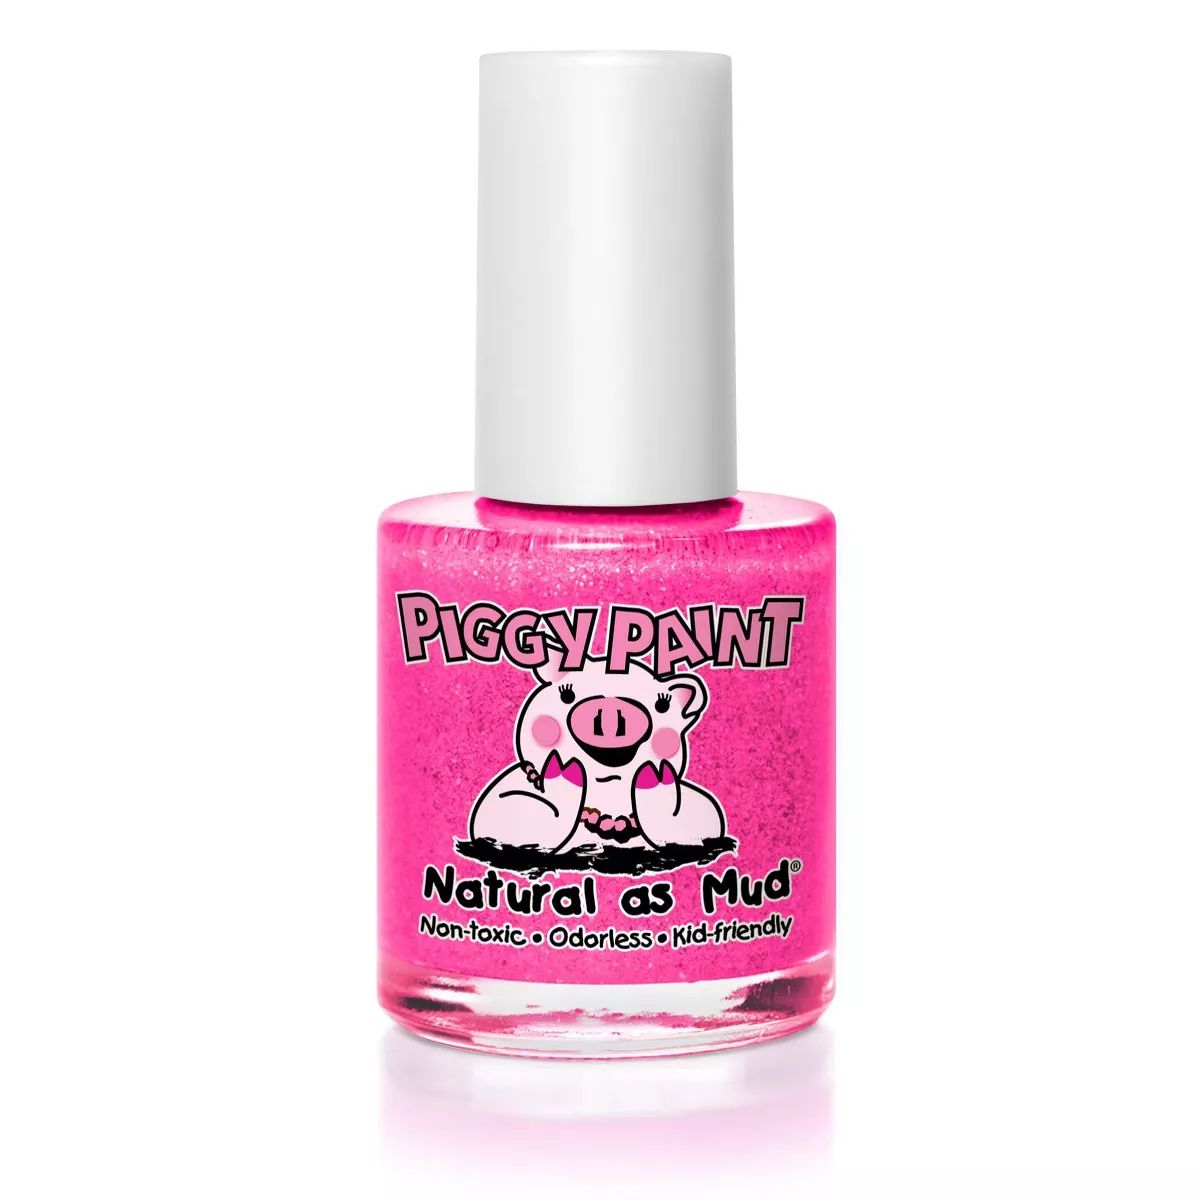 Piggy Paint Nail Polish - 0.33 fl oz | Target